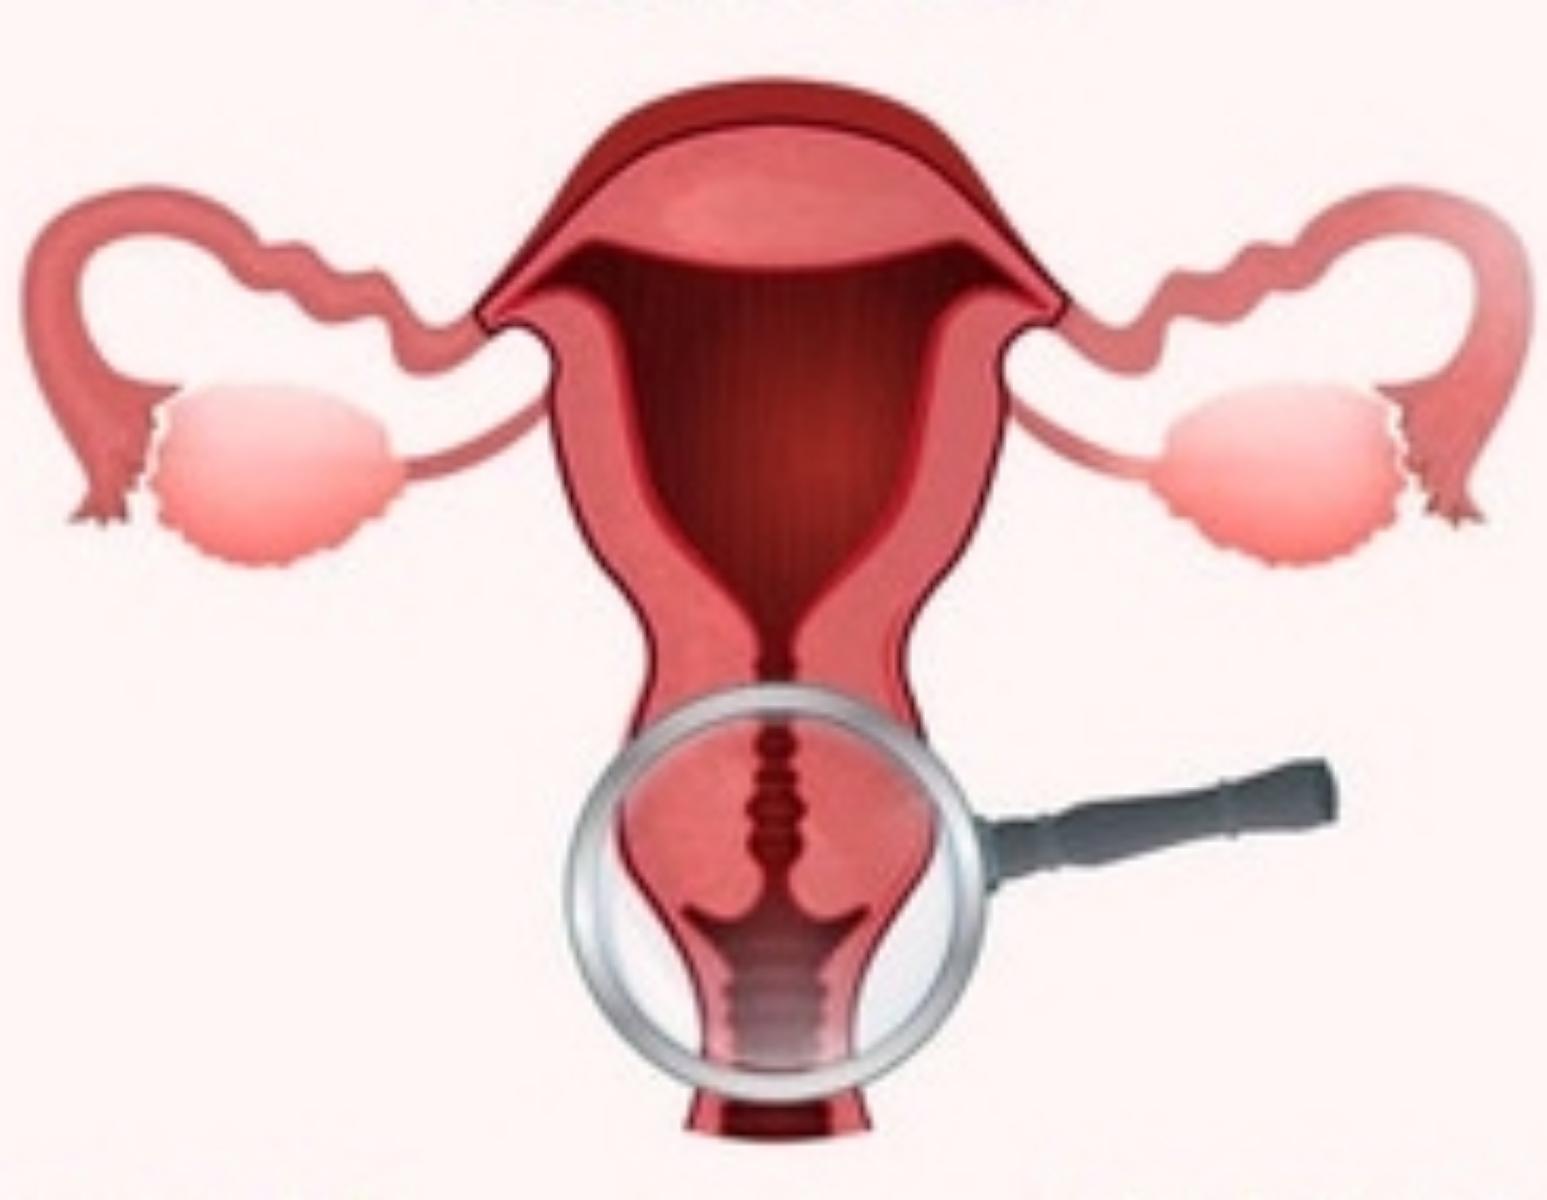 Cervical fluid